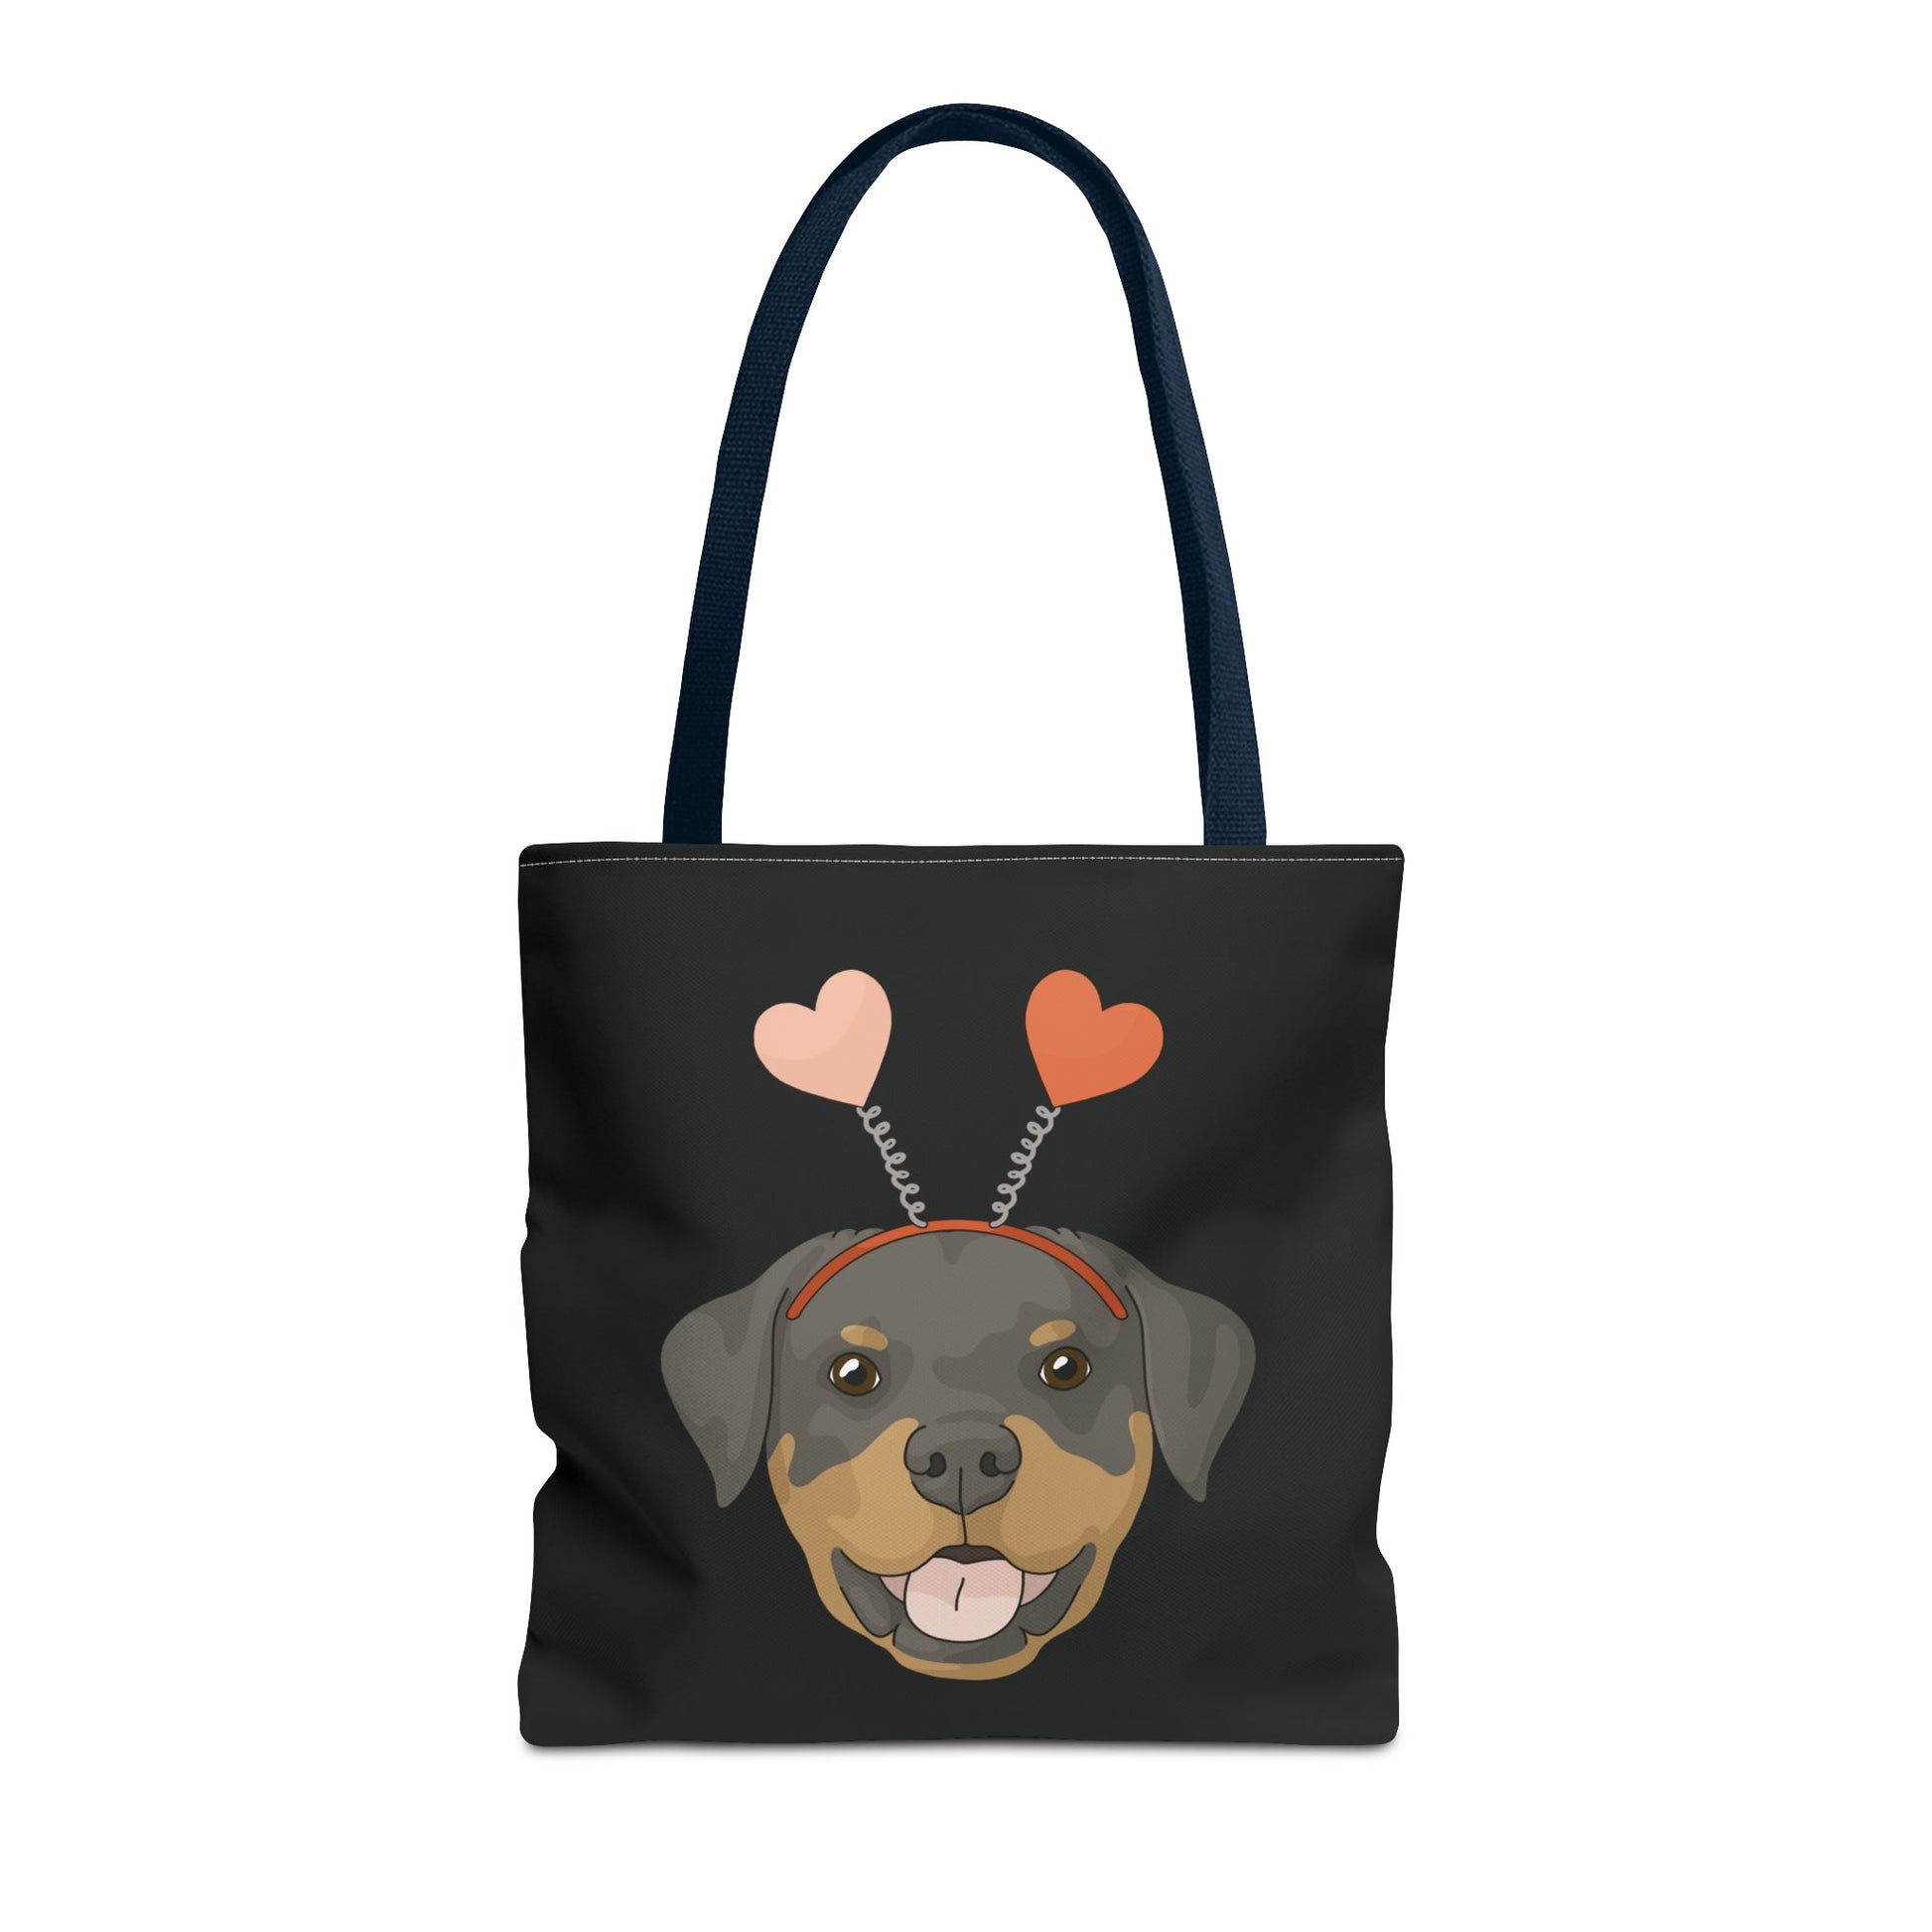 A Very Rottie Valentine | Tote Bag - Detezi Designs-24594834630867323338